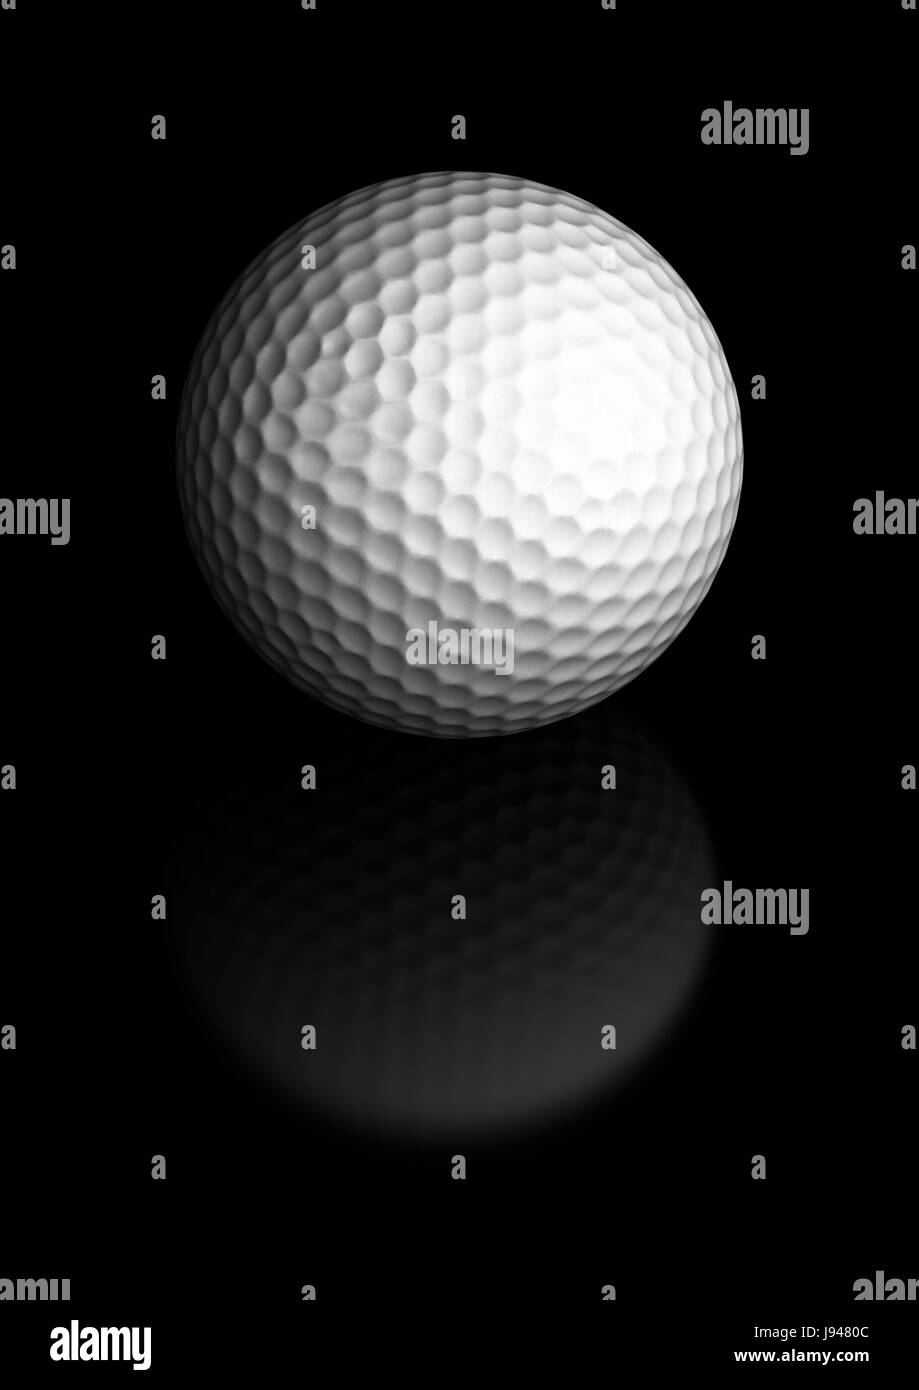 Ball, noir, de teint basané, jetblack, noir profond, golf, objet, macro, close-up, Banque D'Images